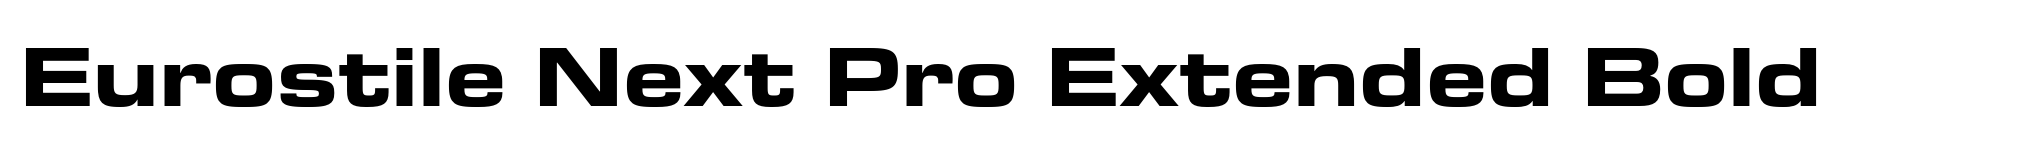 Eurostile Next Pro Extended Bold image